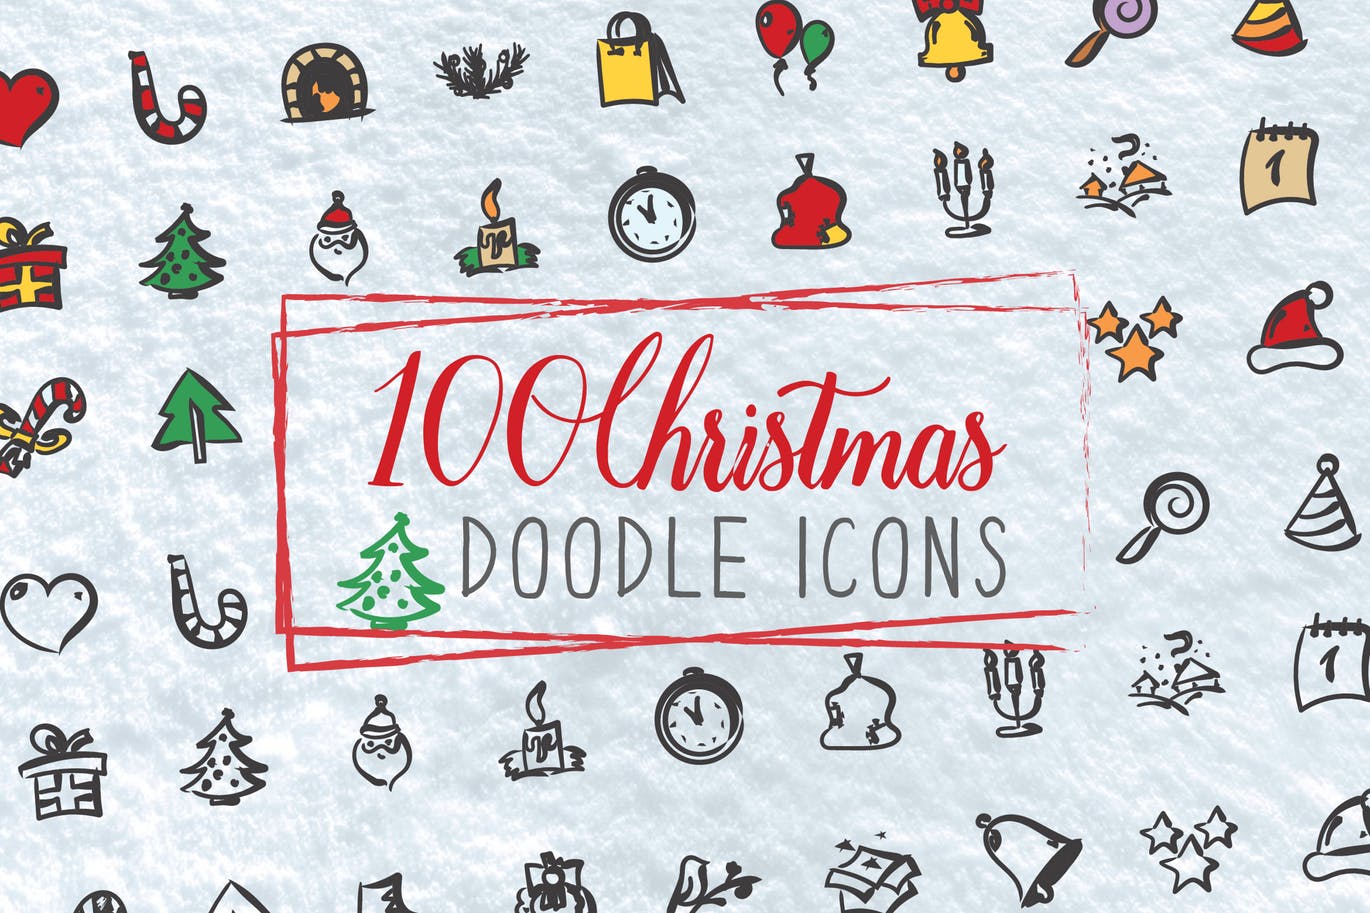 Christmas doodle icon set